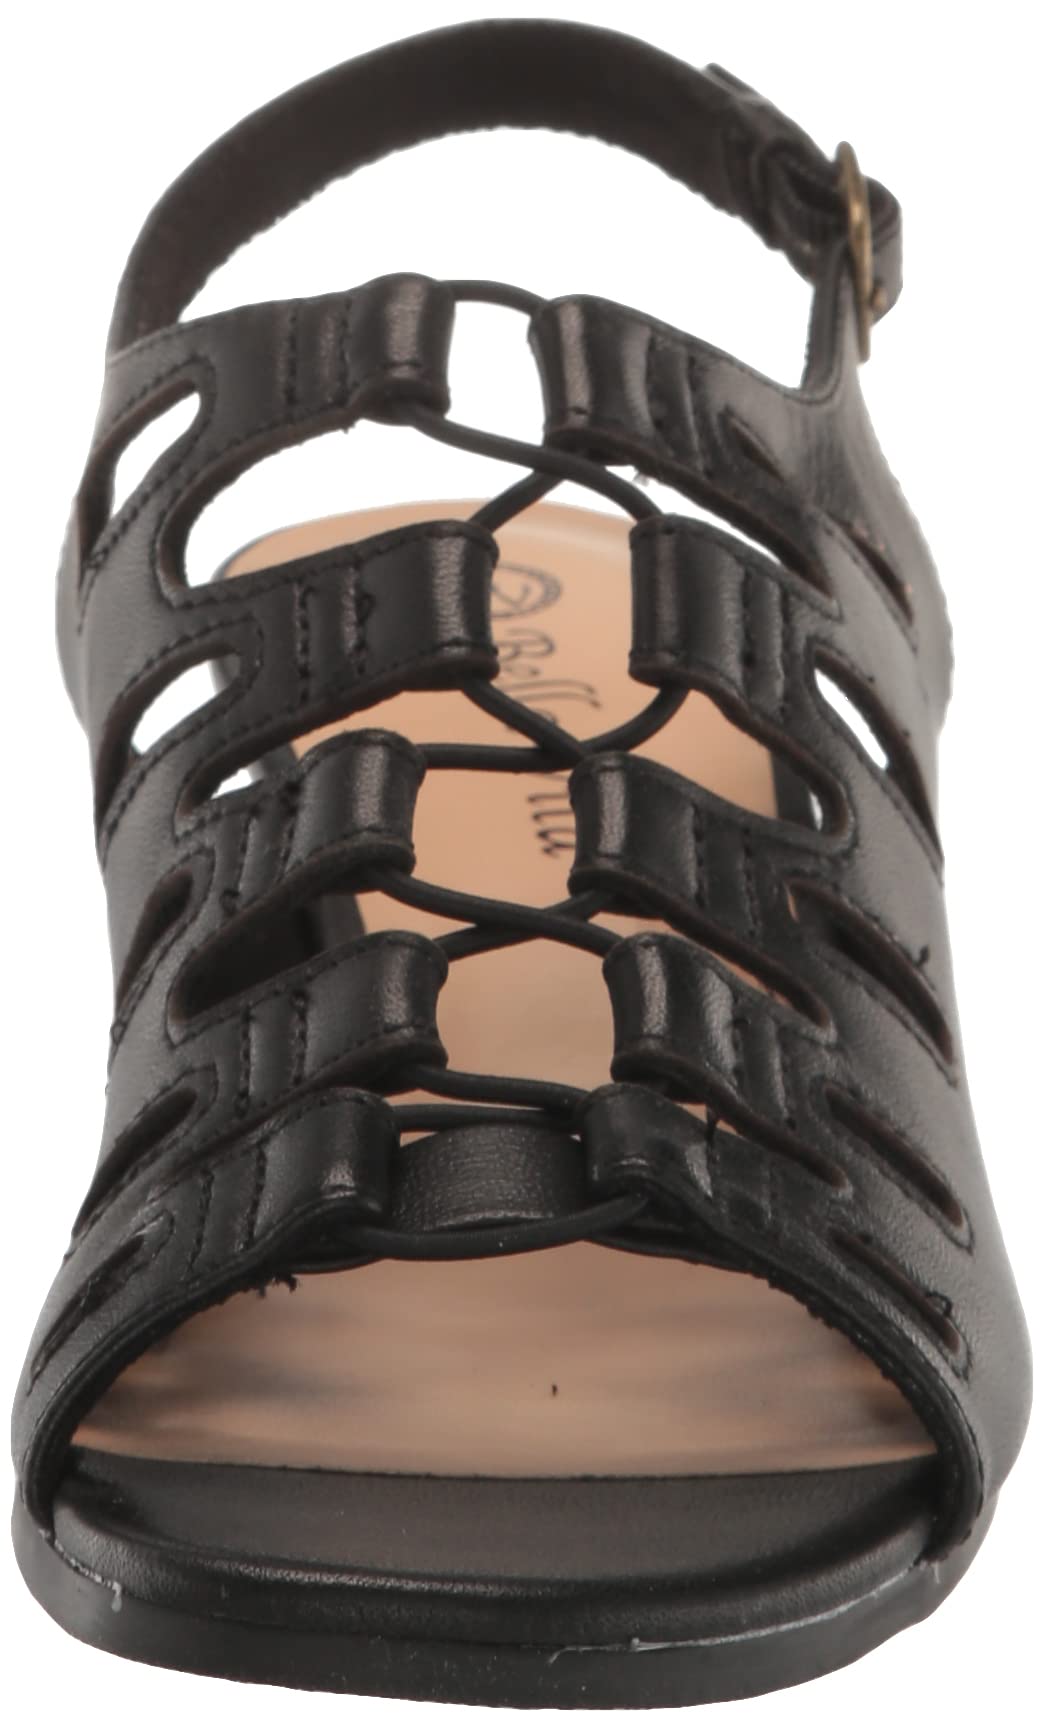 Bella Vita Women's Zamira Wedge Sandal, Black Leather, 6.5 Narrow